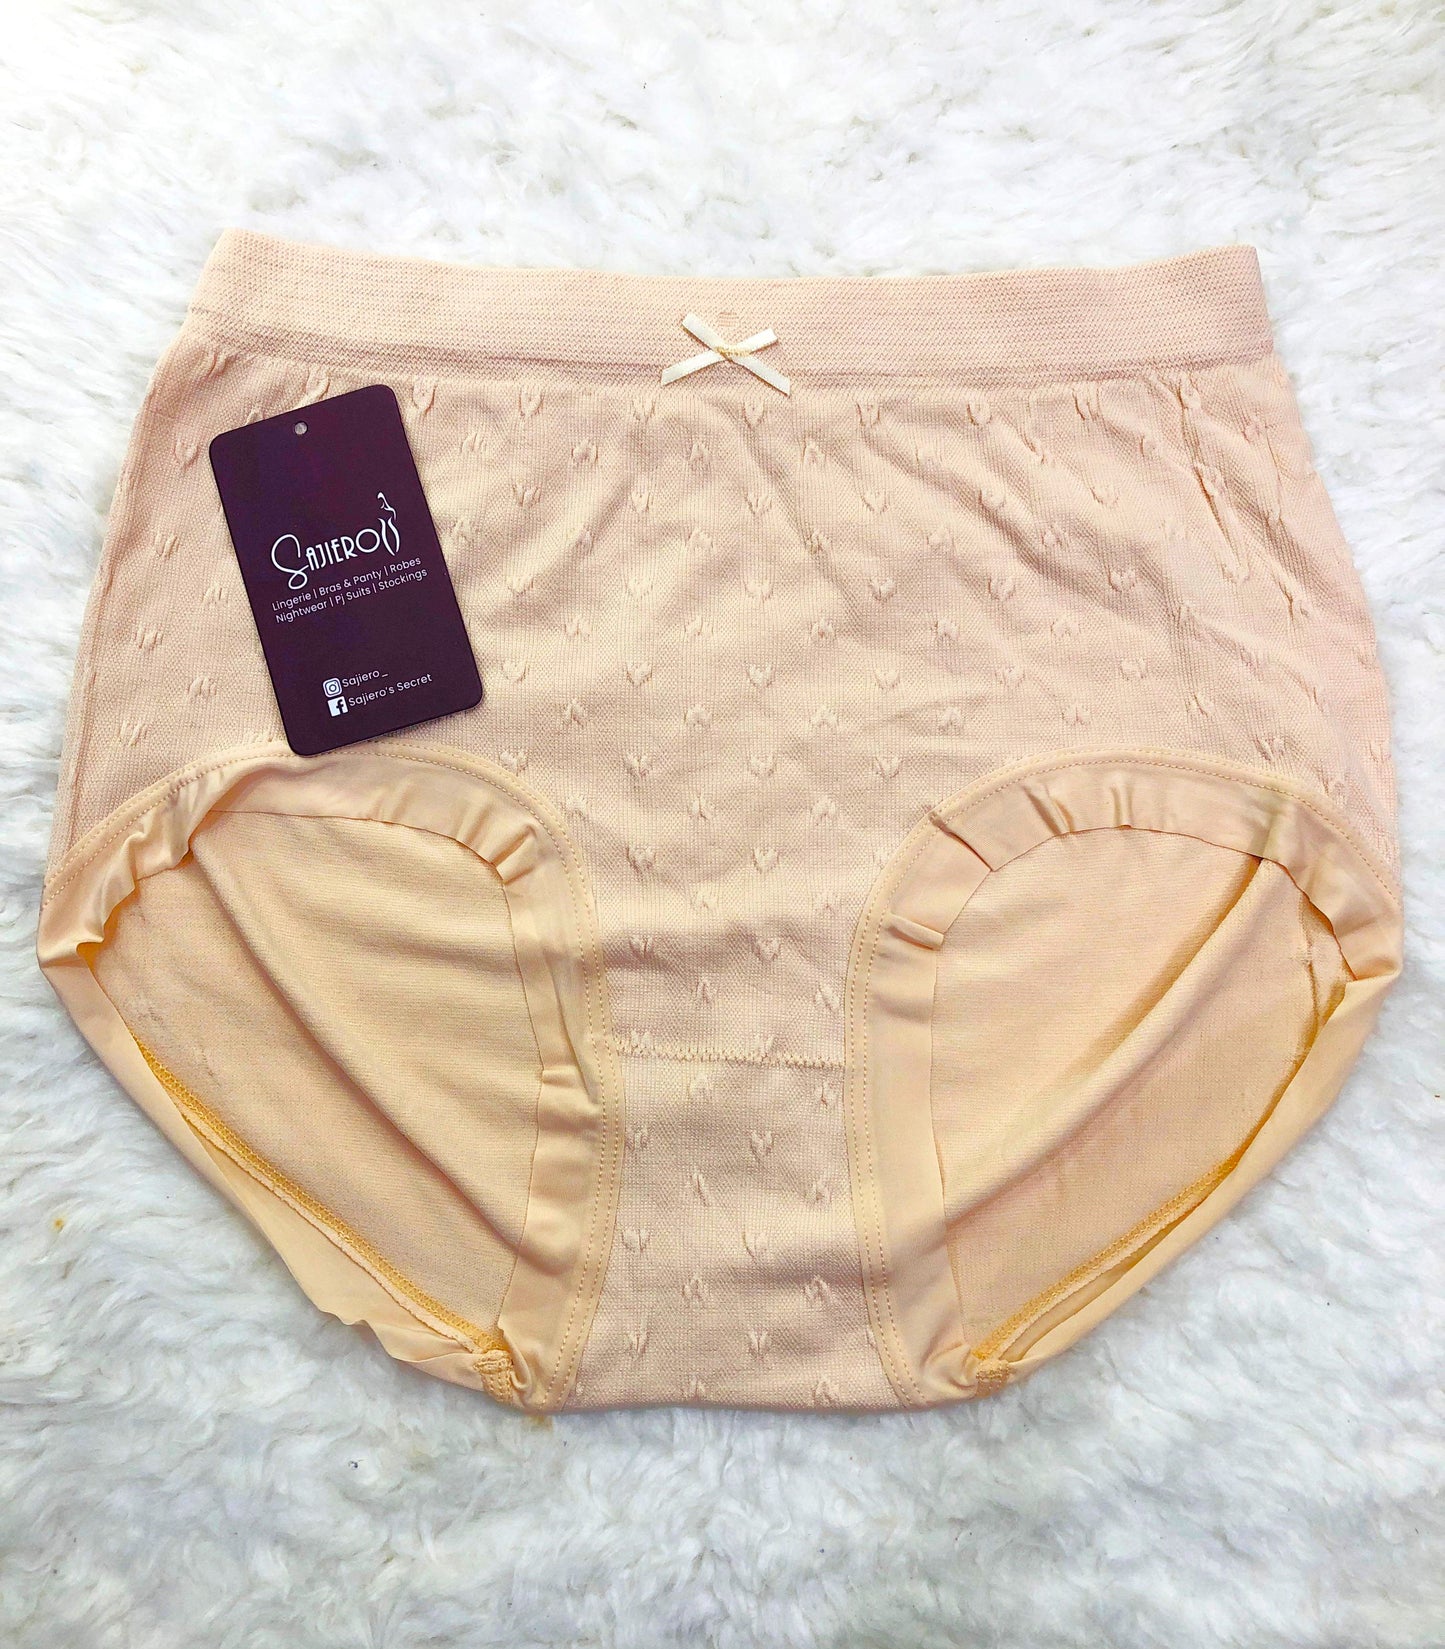 Sajiero ZAV Plus Size Extra Stretchable Brief Cotton Panty